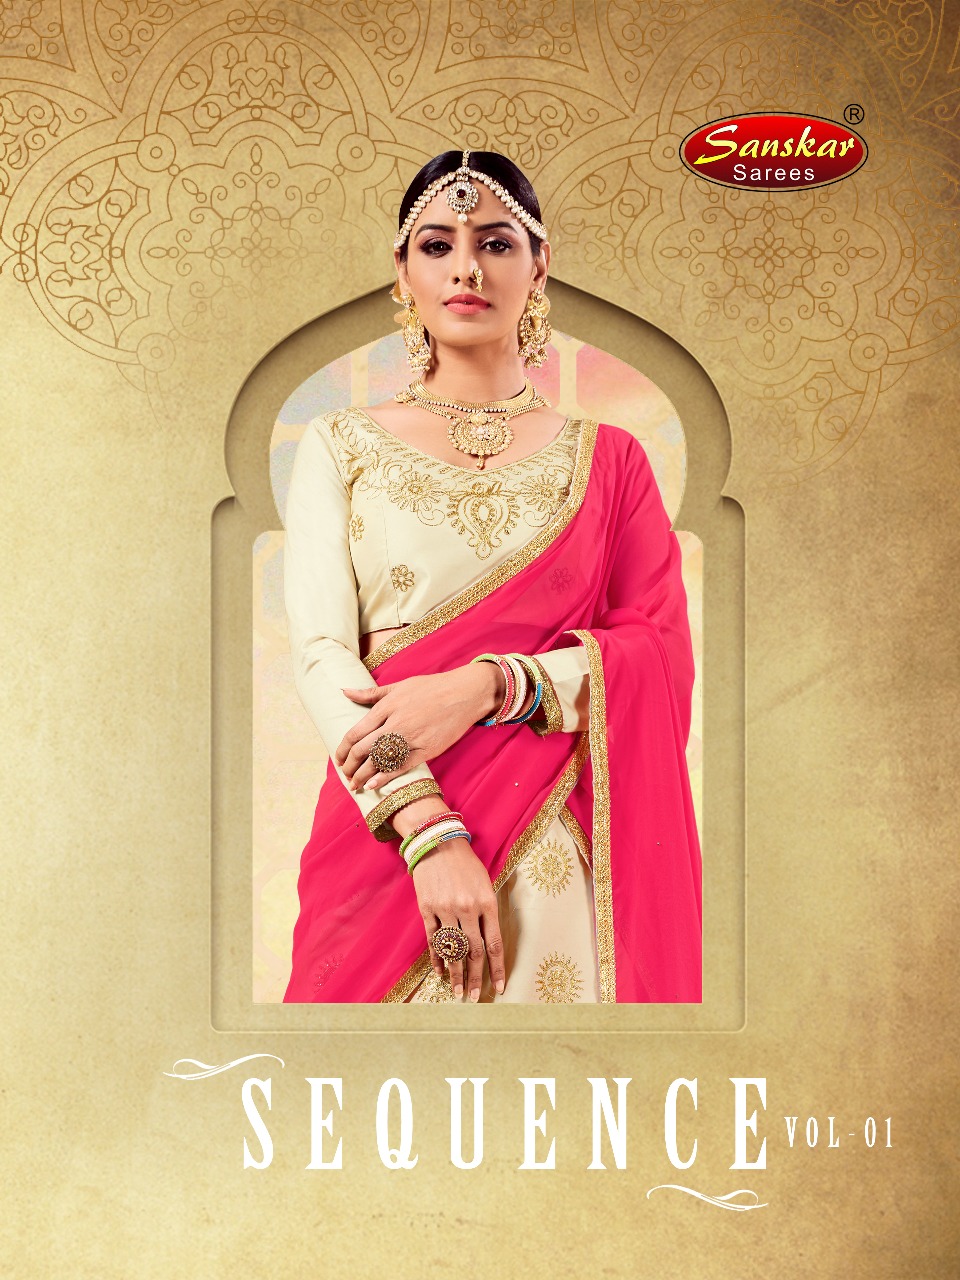 Sanskar sarees presents sequence vol 1 festive collection of lehenga